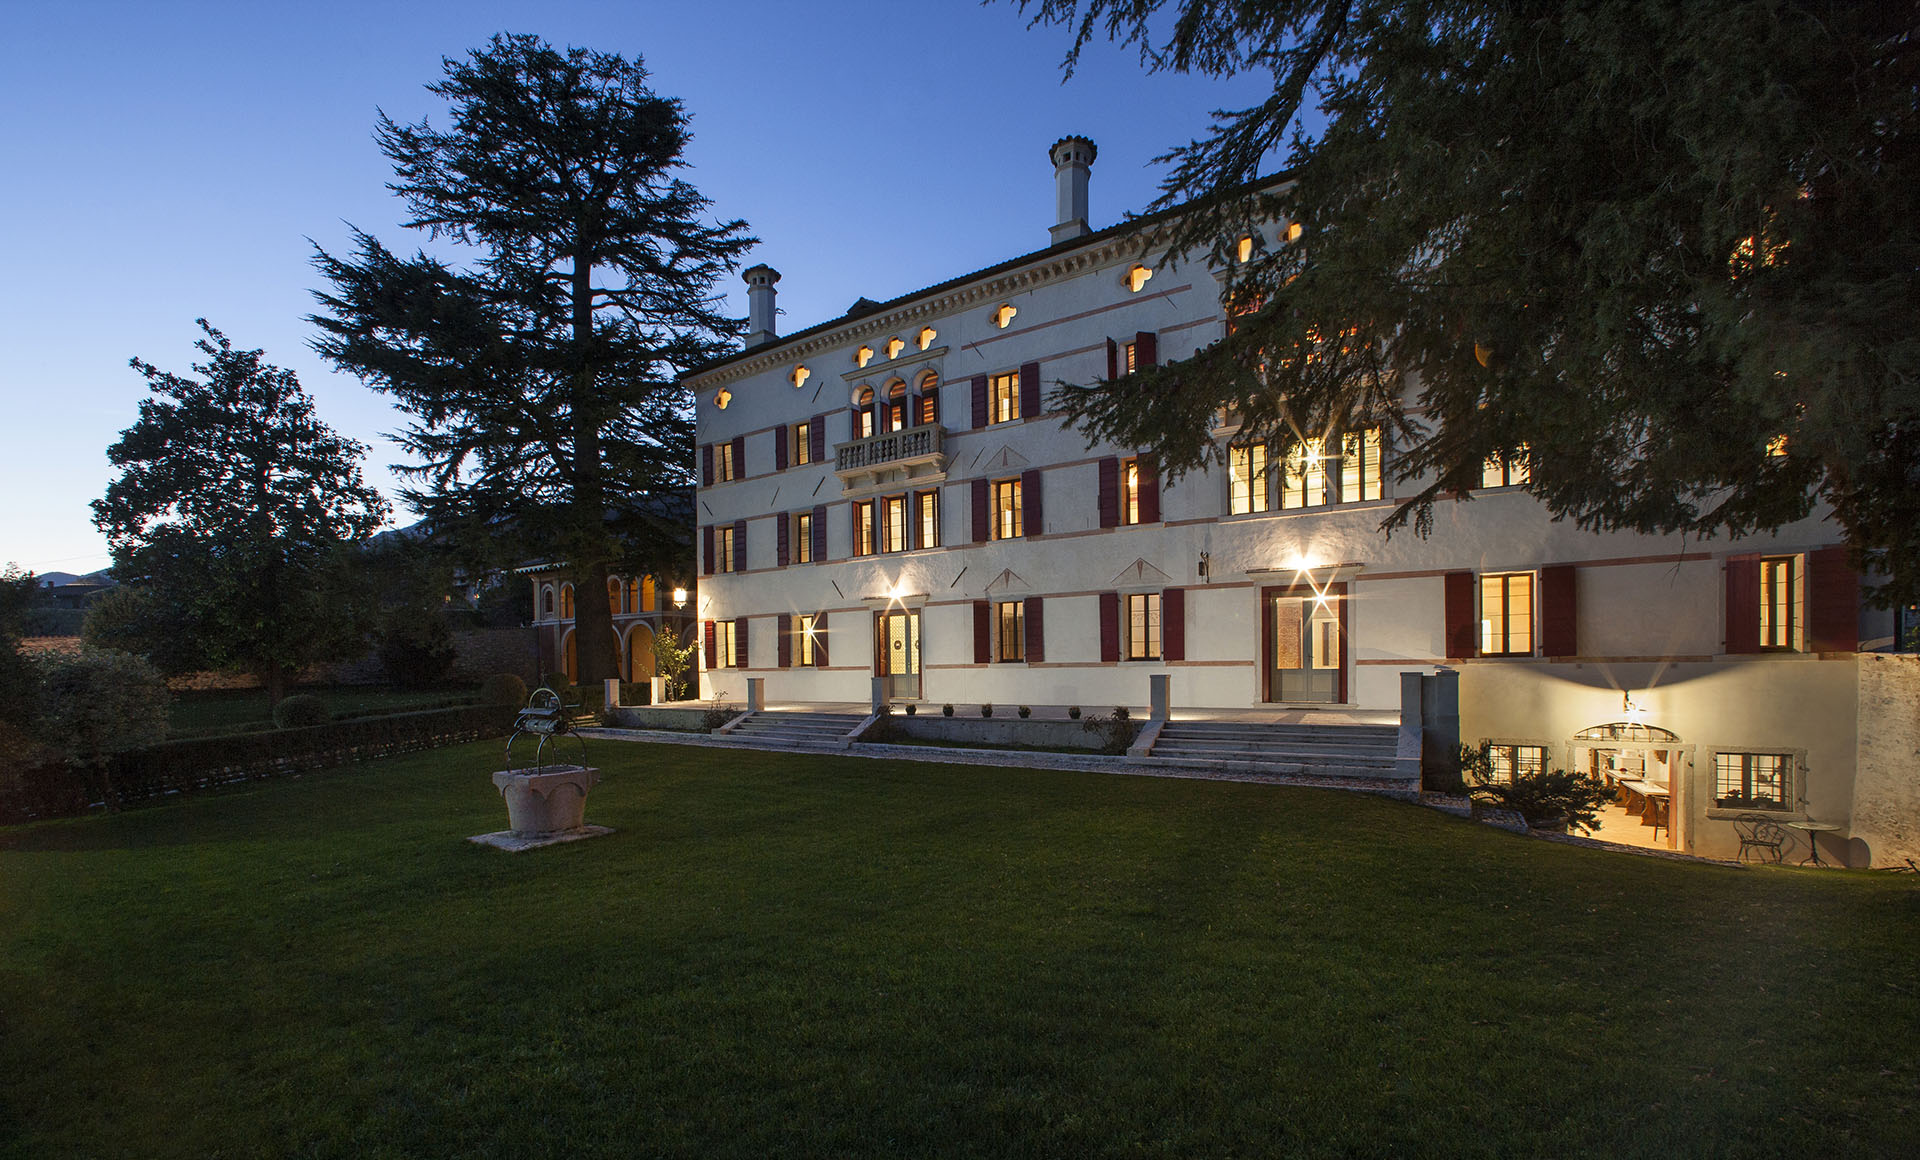 Villa Premoli by night